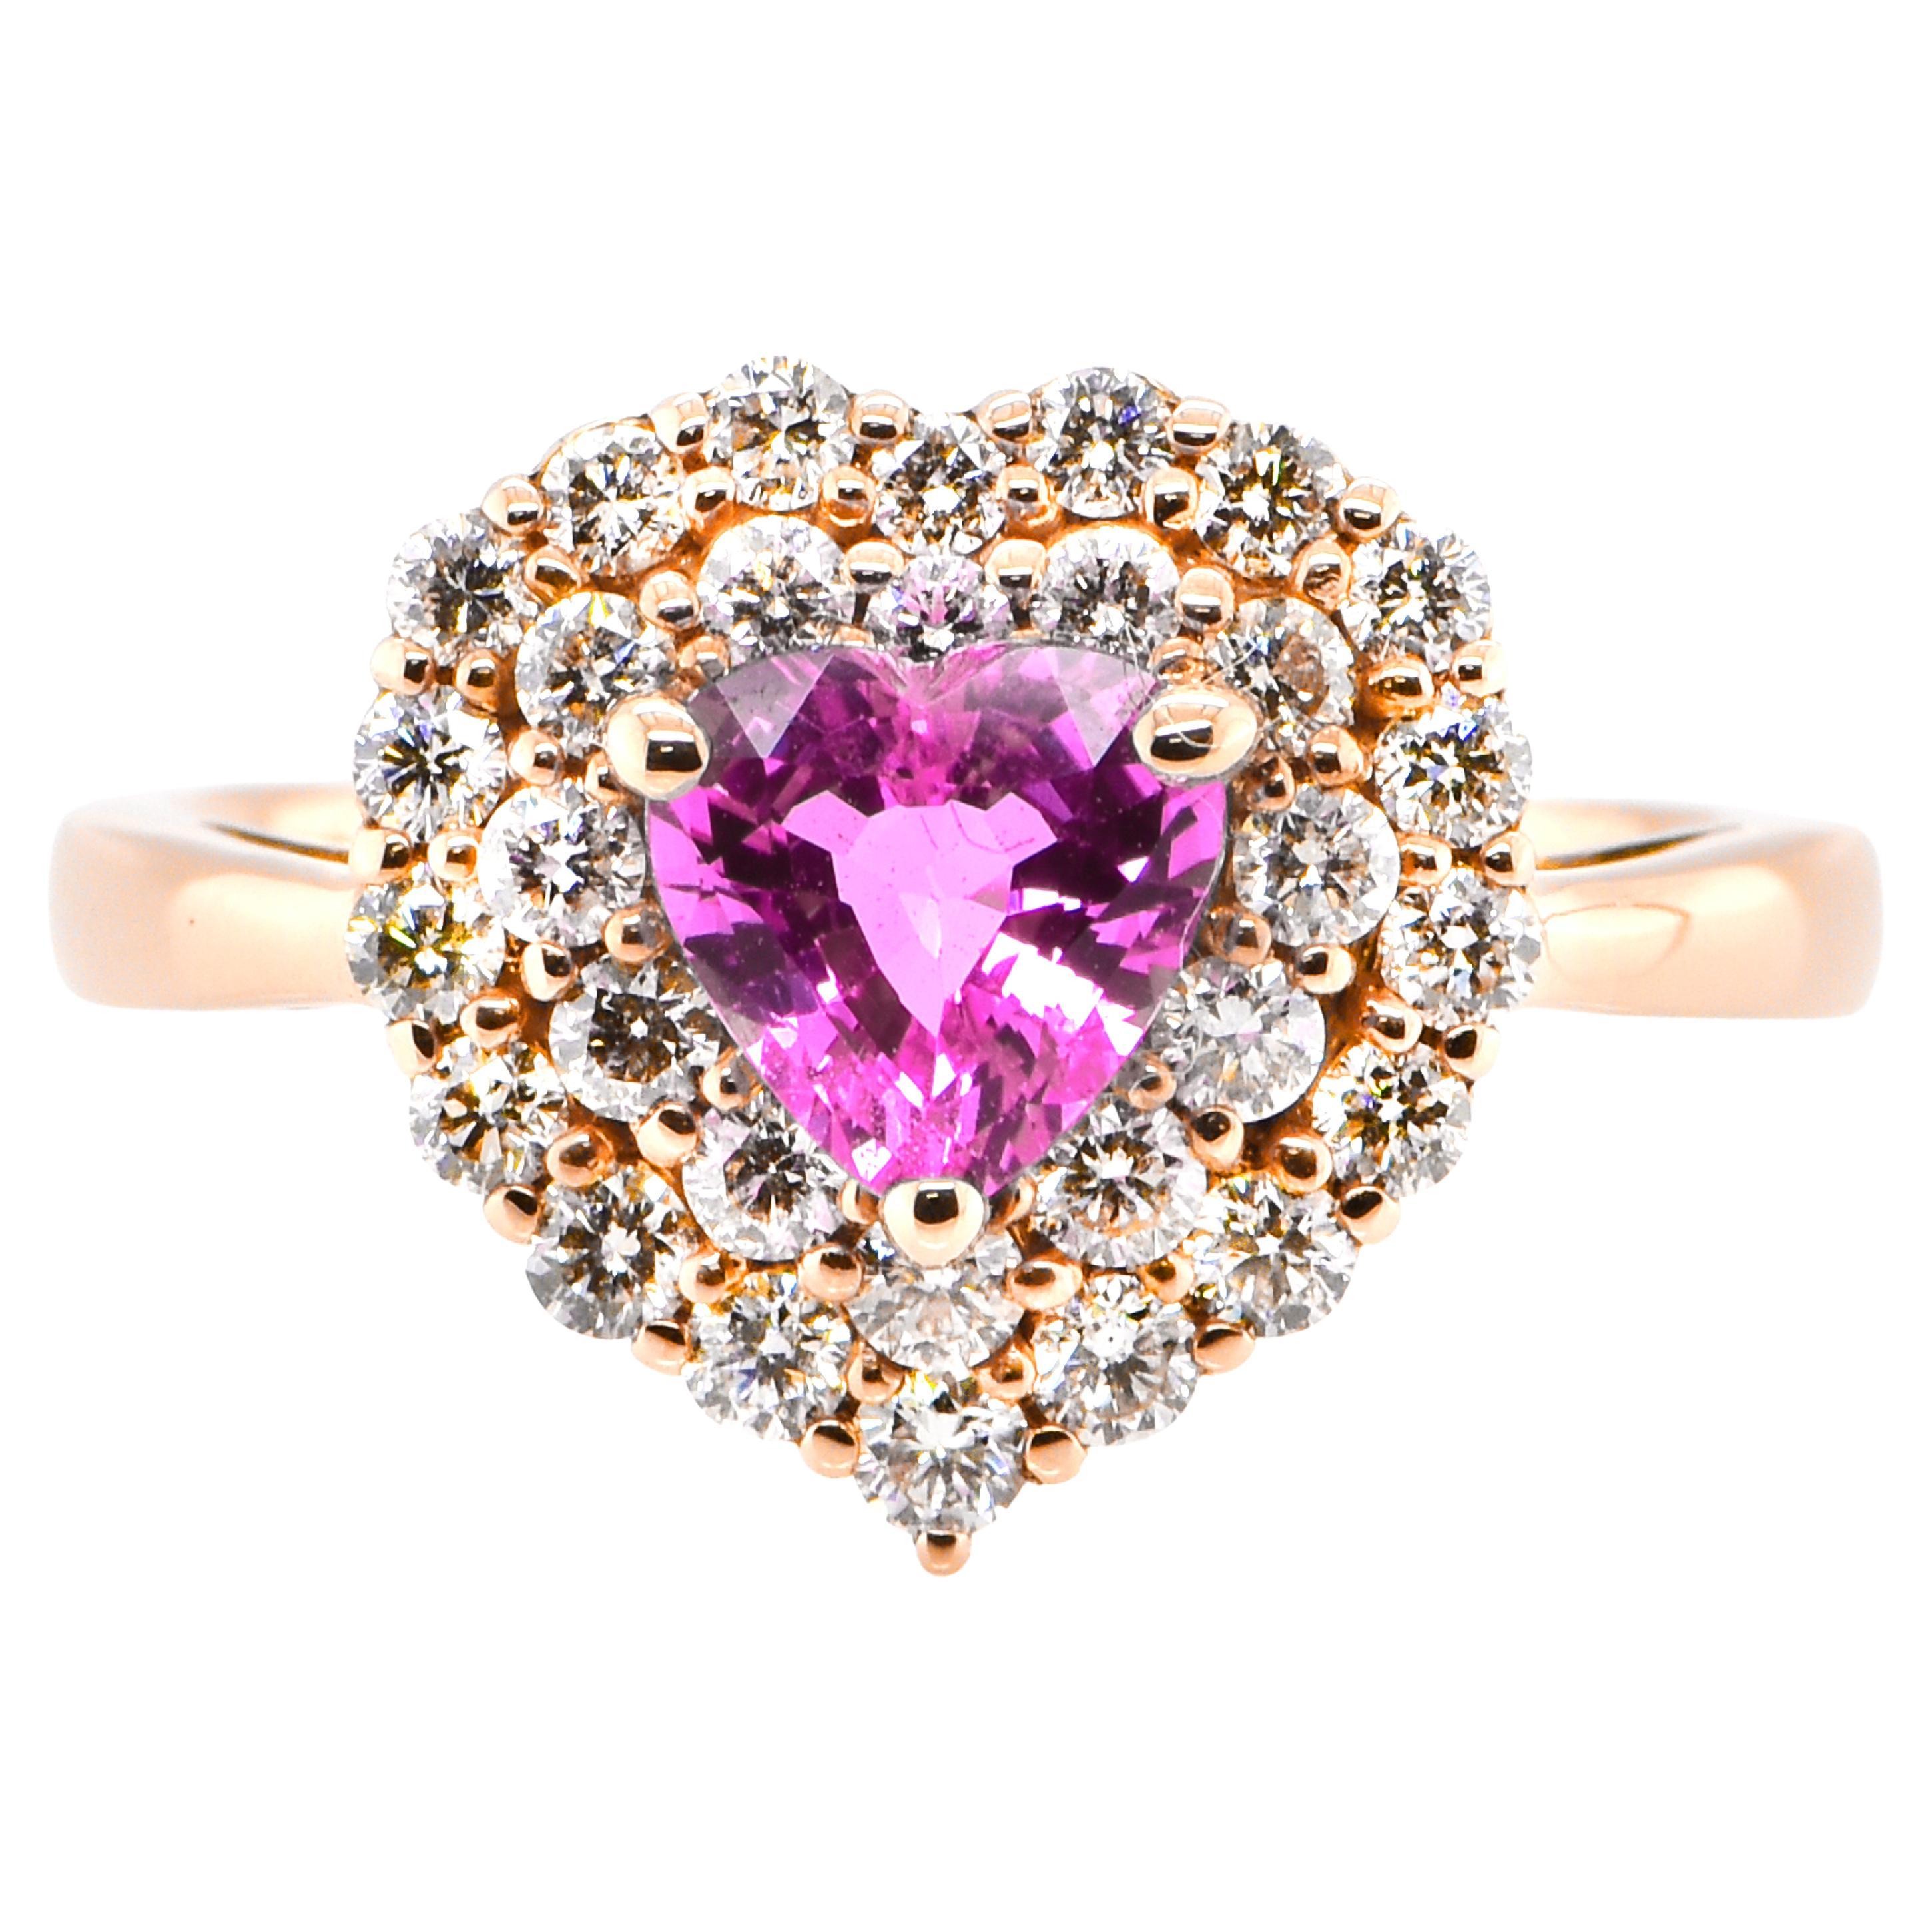 1.06 Carat Heart-Cut Pink Sapphire and Diamond Ring Set in 18 Karat Pink Gold